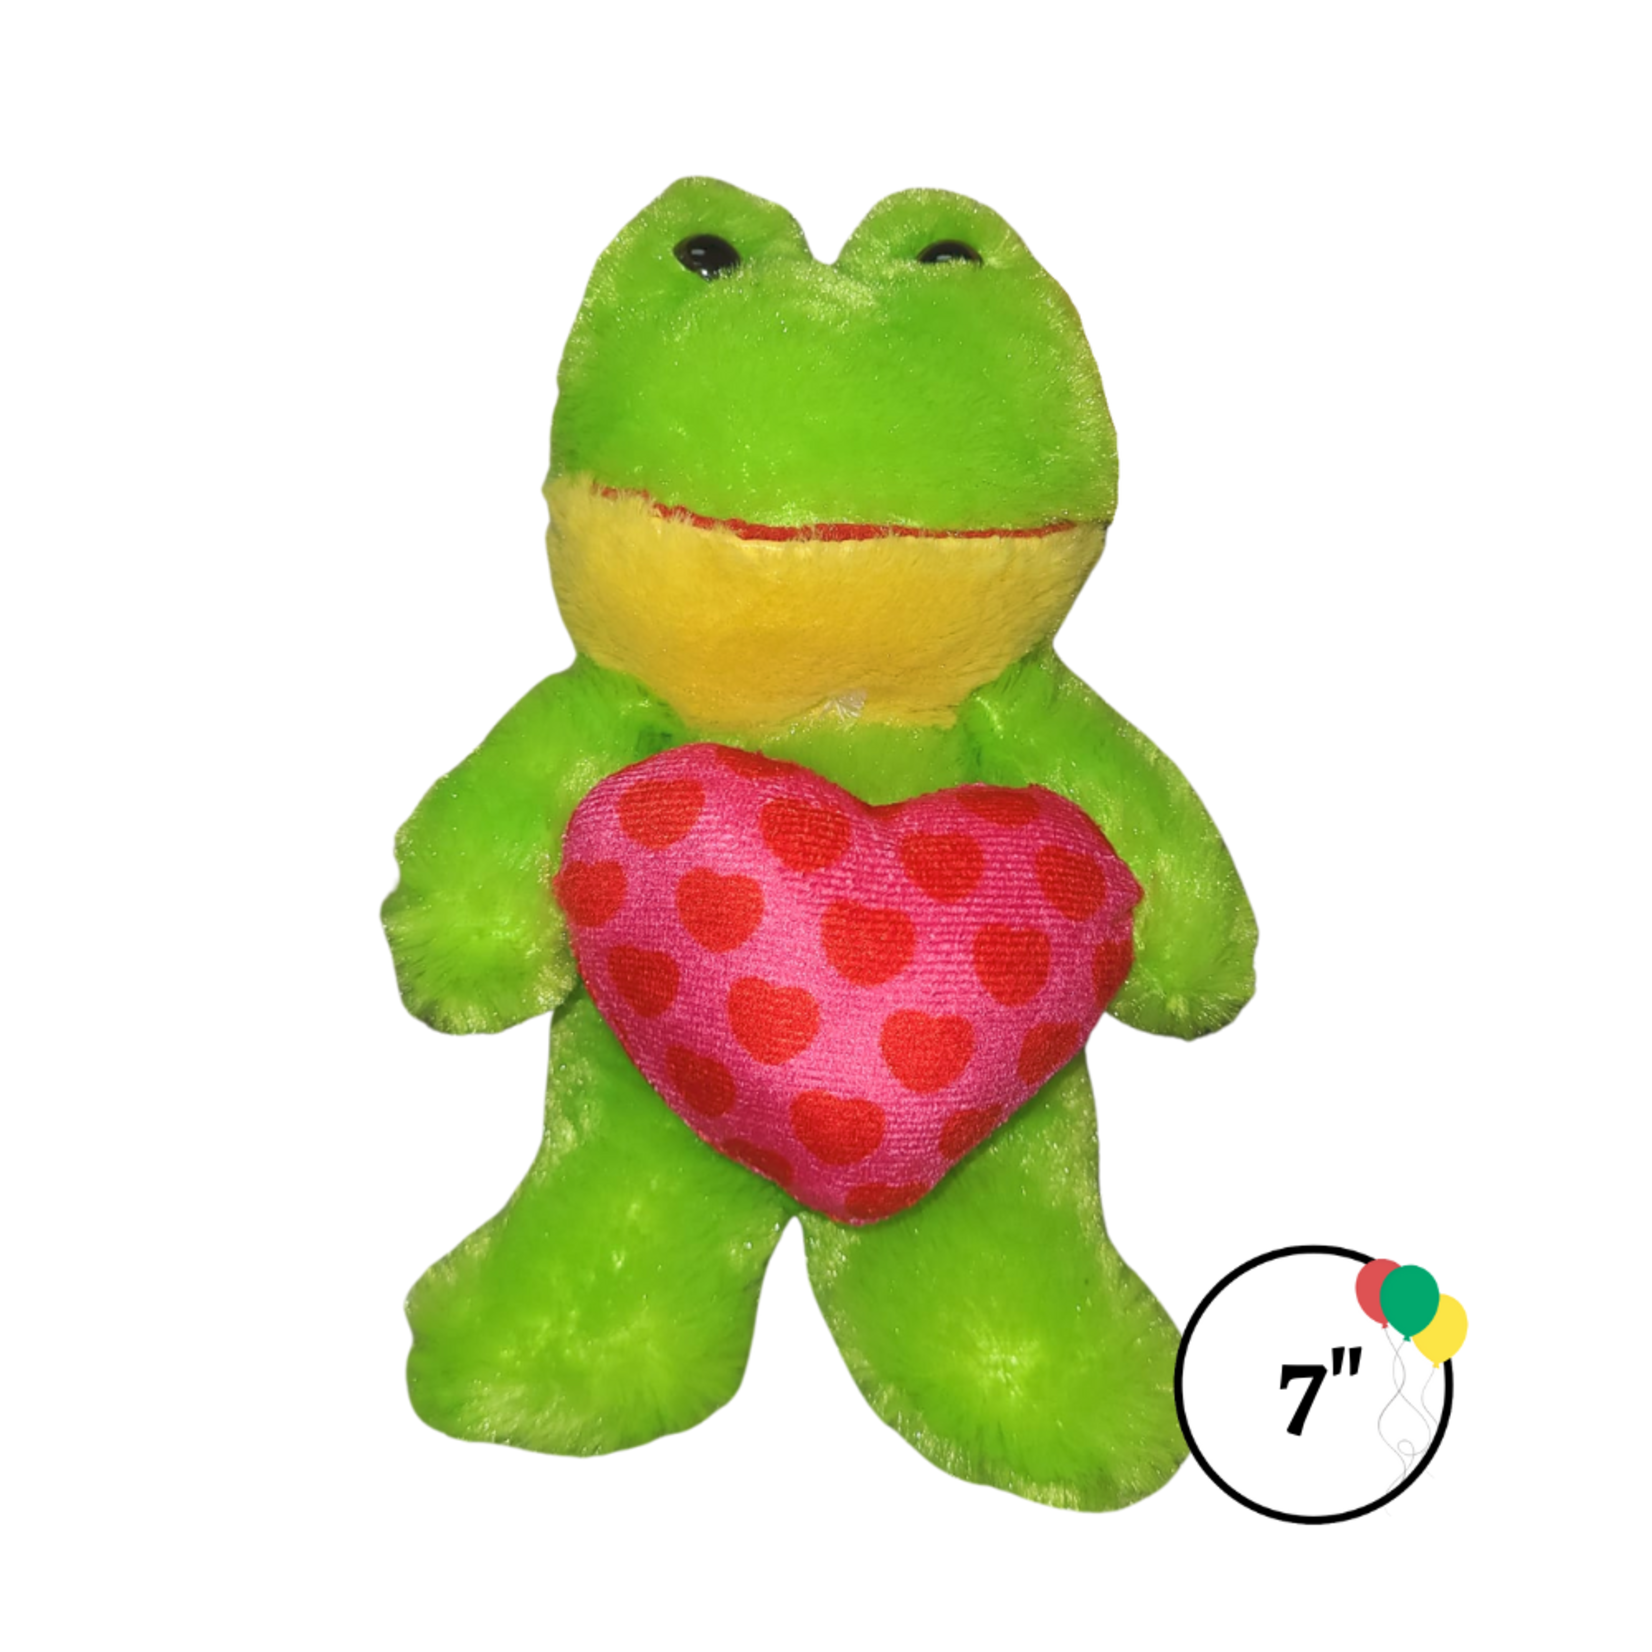 Plush Passover Frog Toy